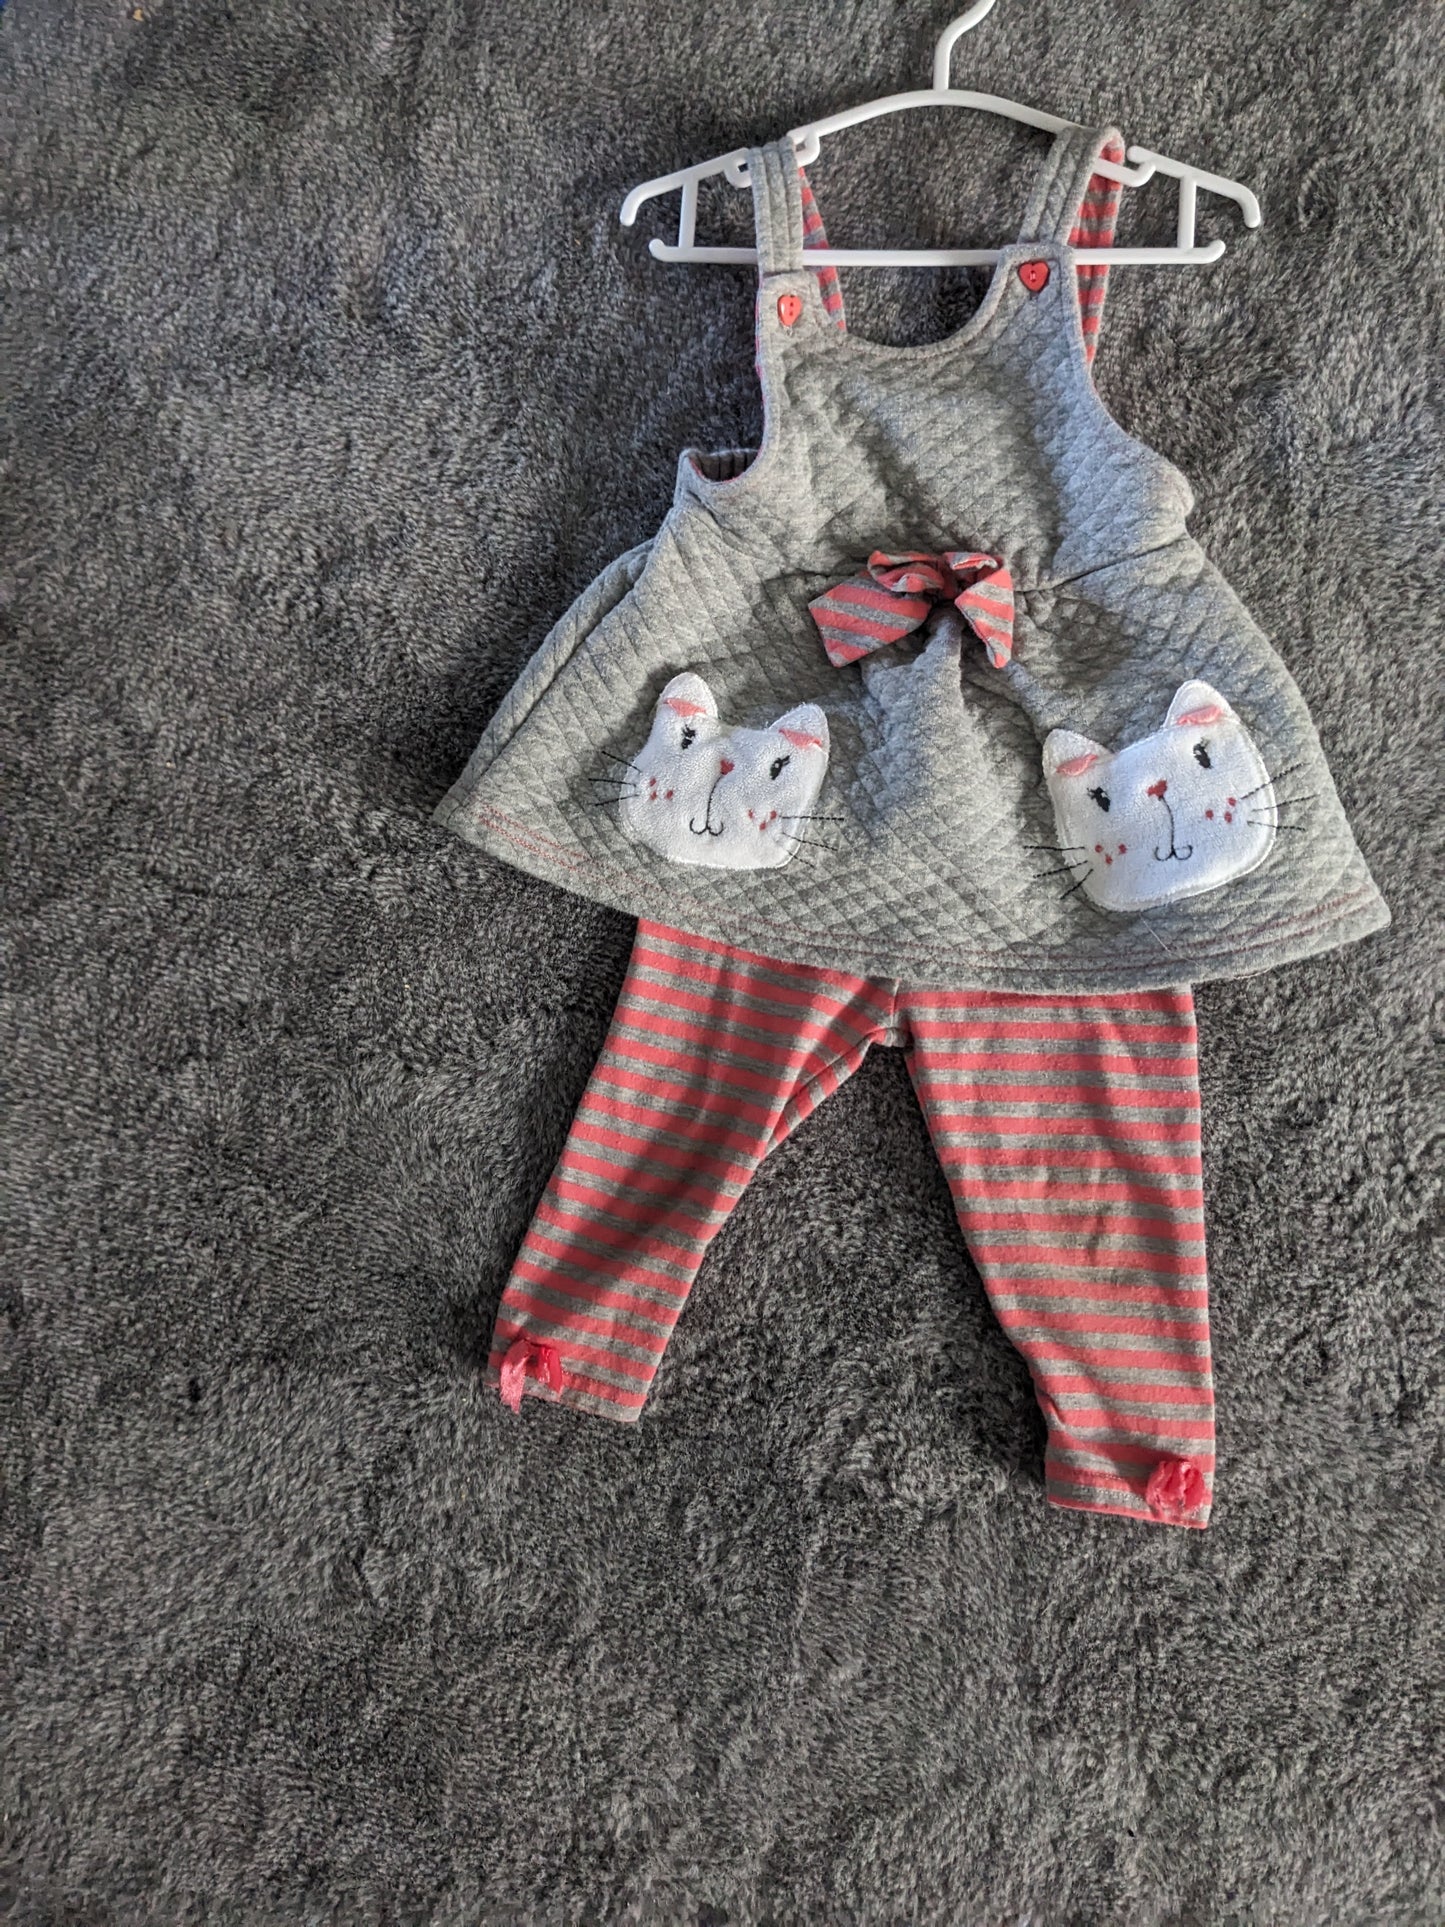 Coral/ grey cat dress w/ leggings size 6-9mo